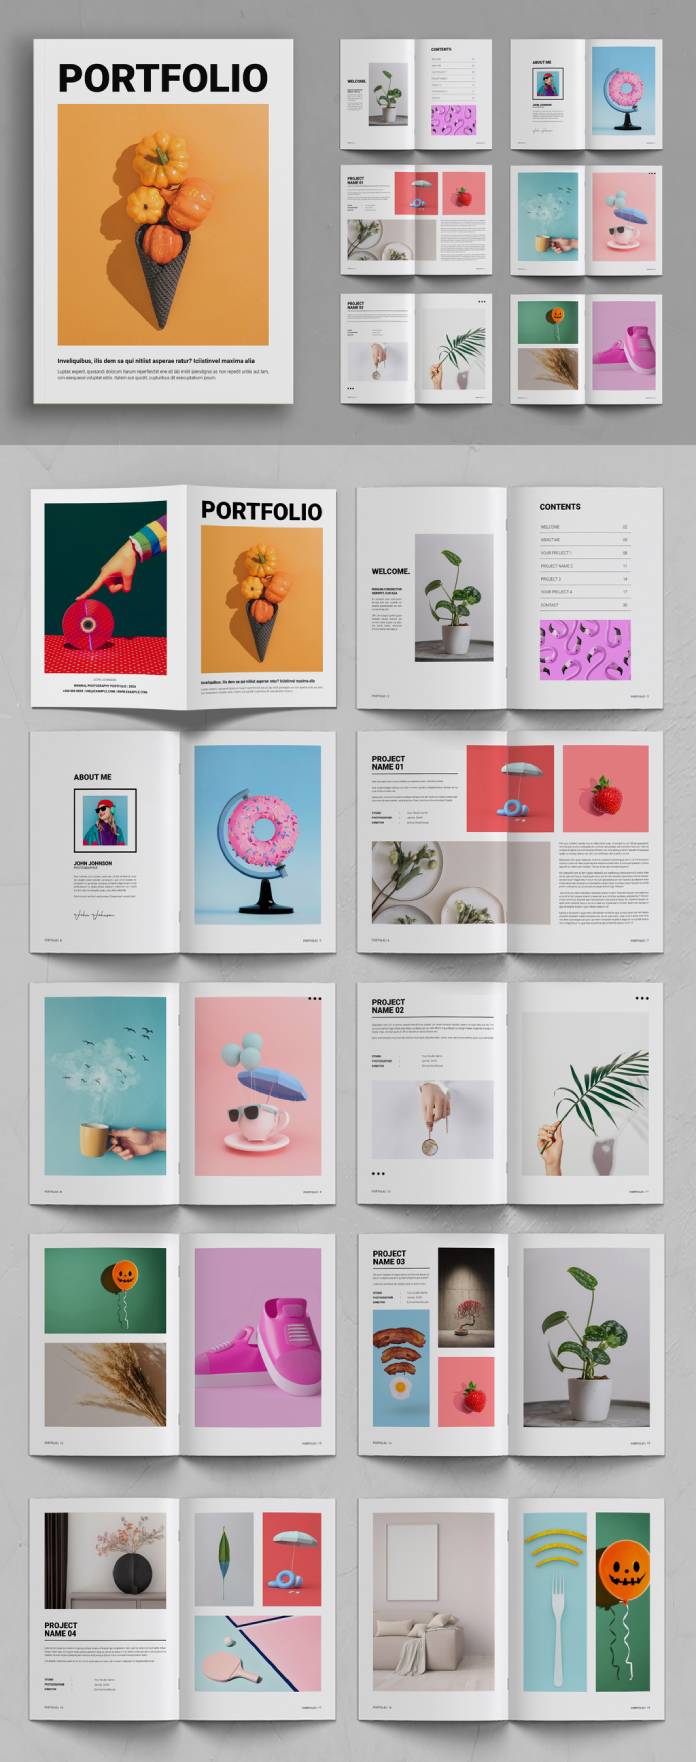 Adobe InDesign Portfolio Template by ContestDesign